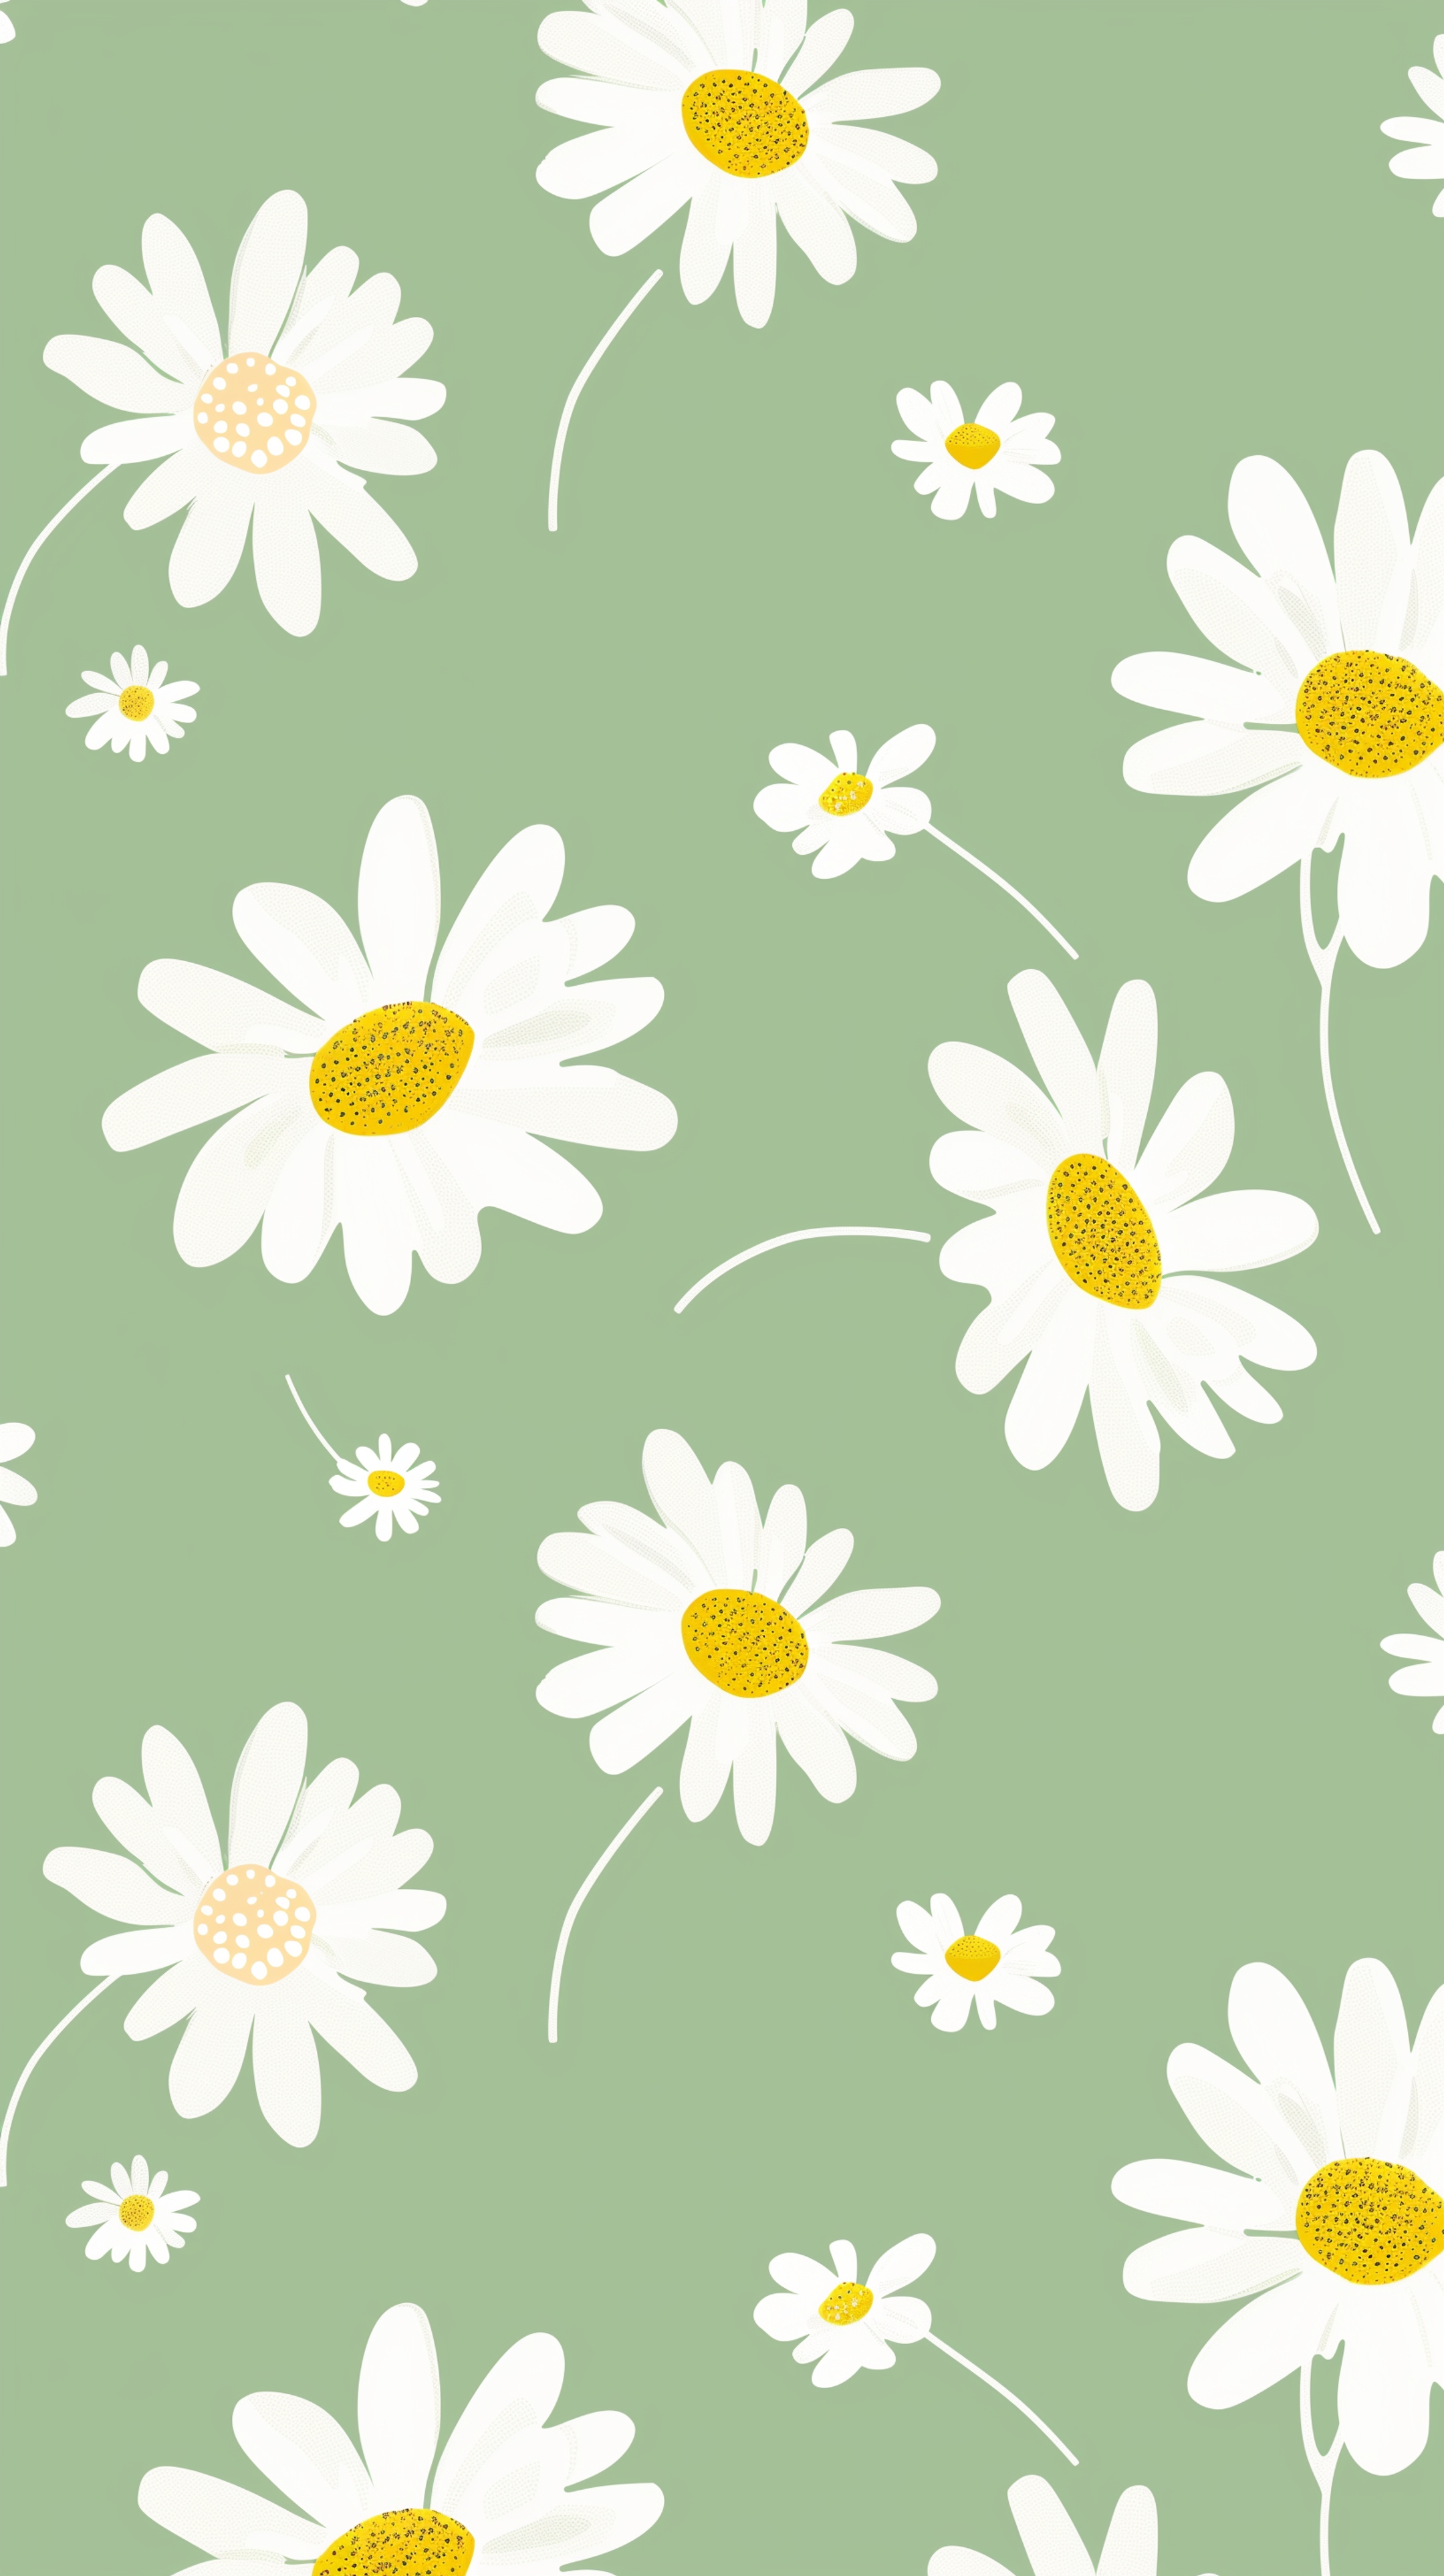 Cheerful Daisy Pattern for Kids Wallpaper[cc2a0d8b223a410ca032]